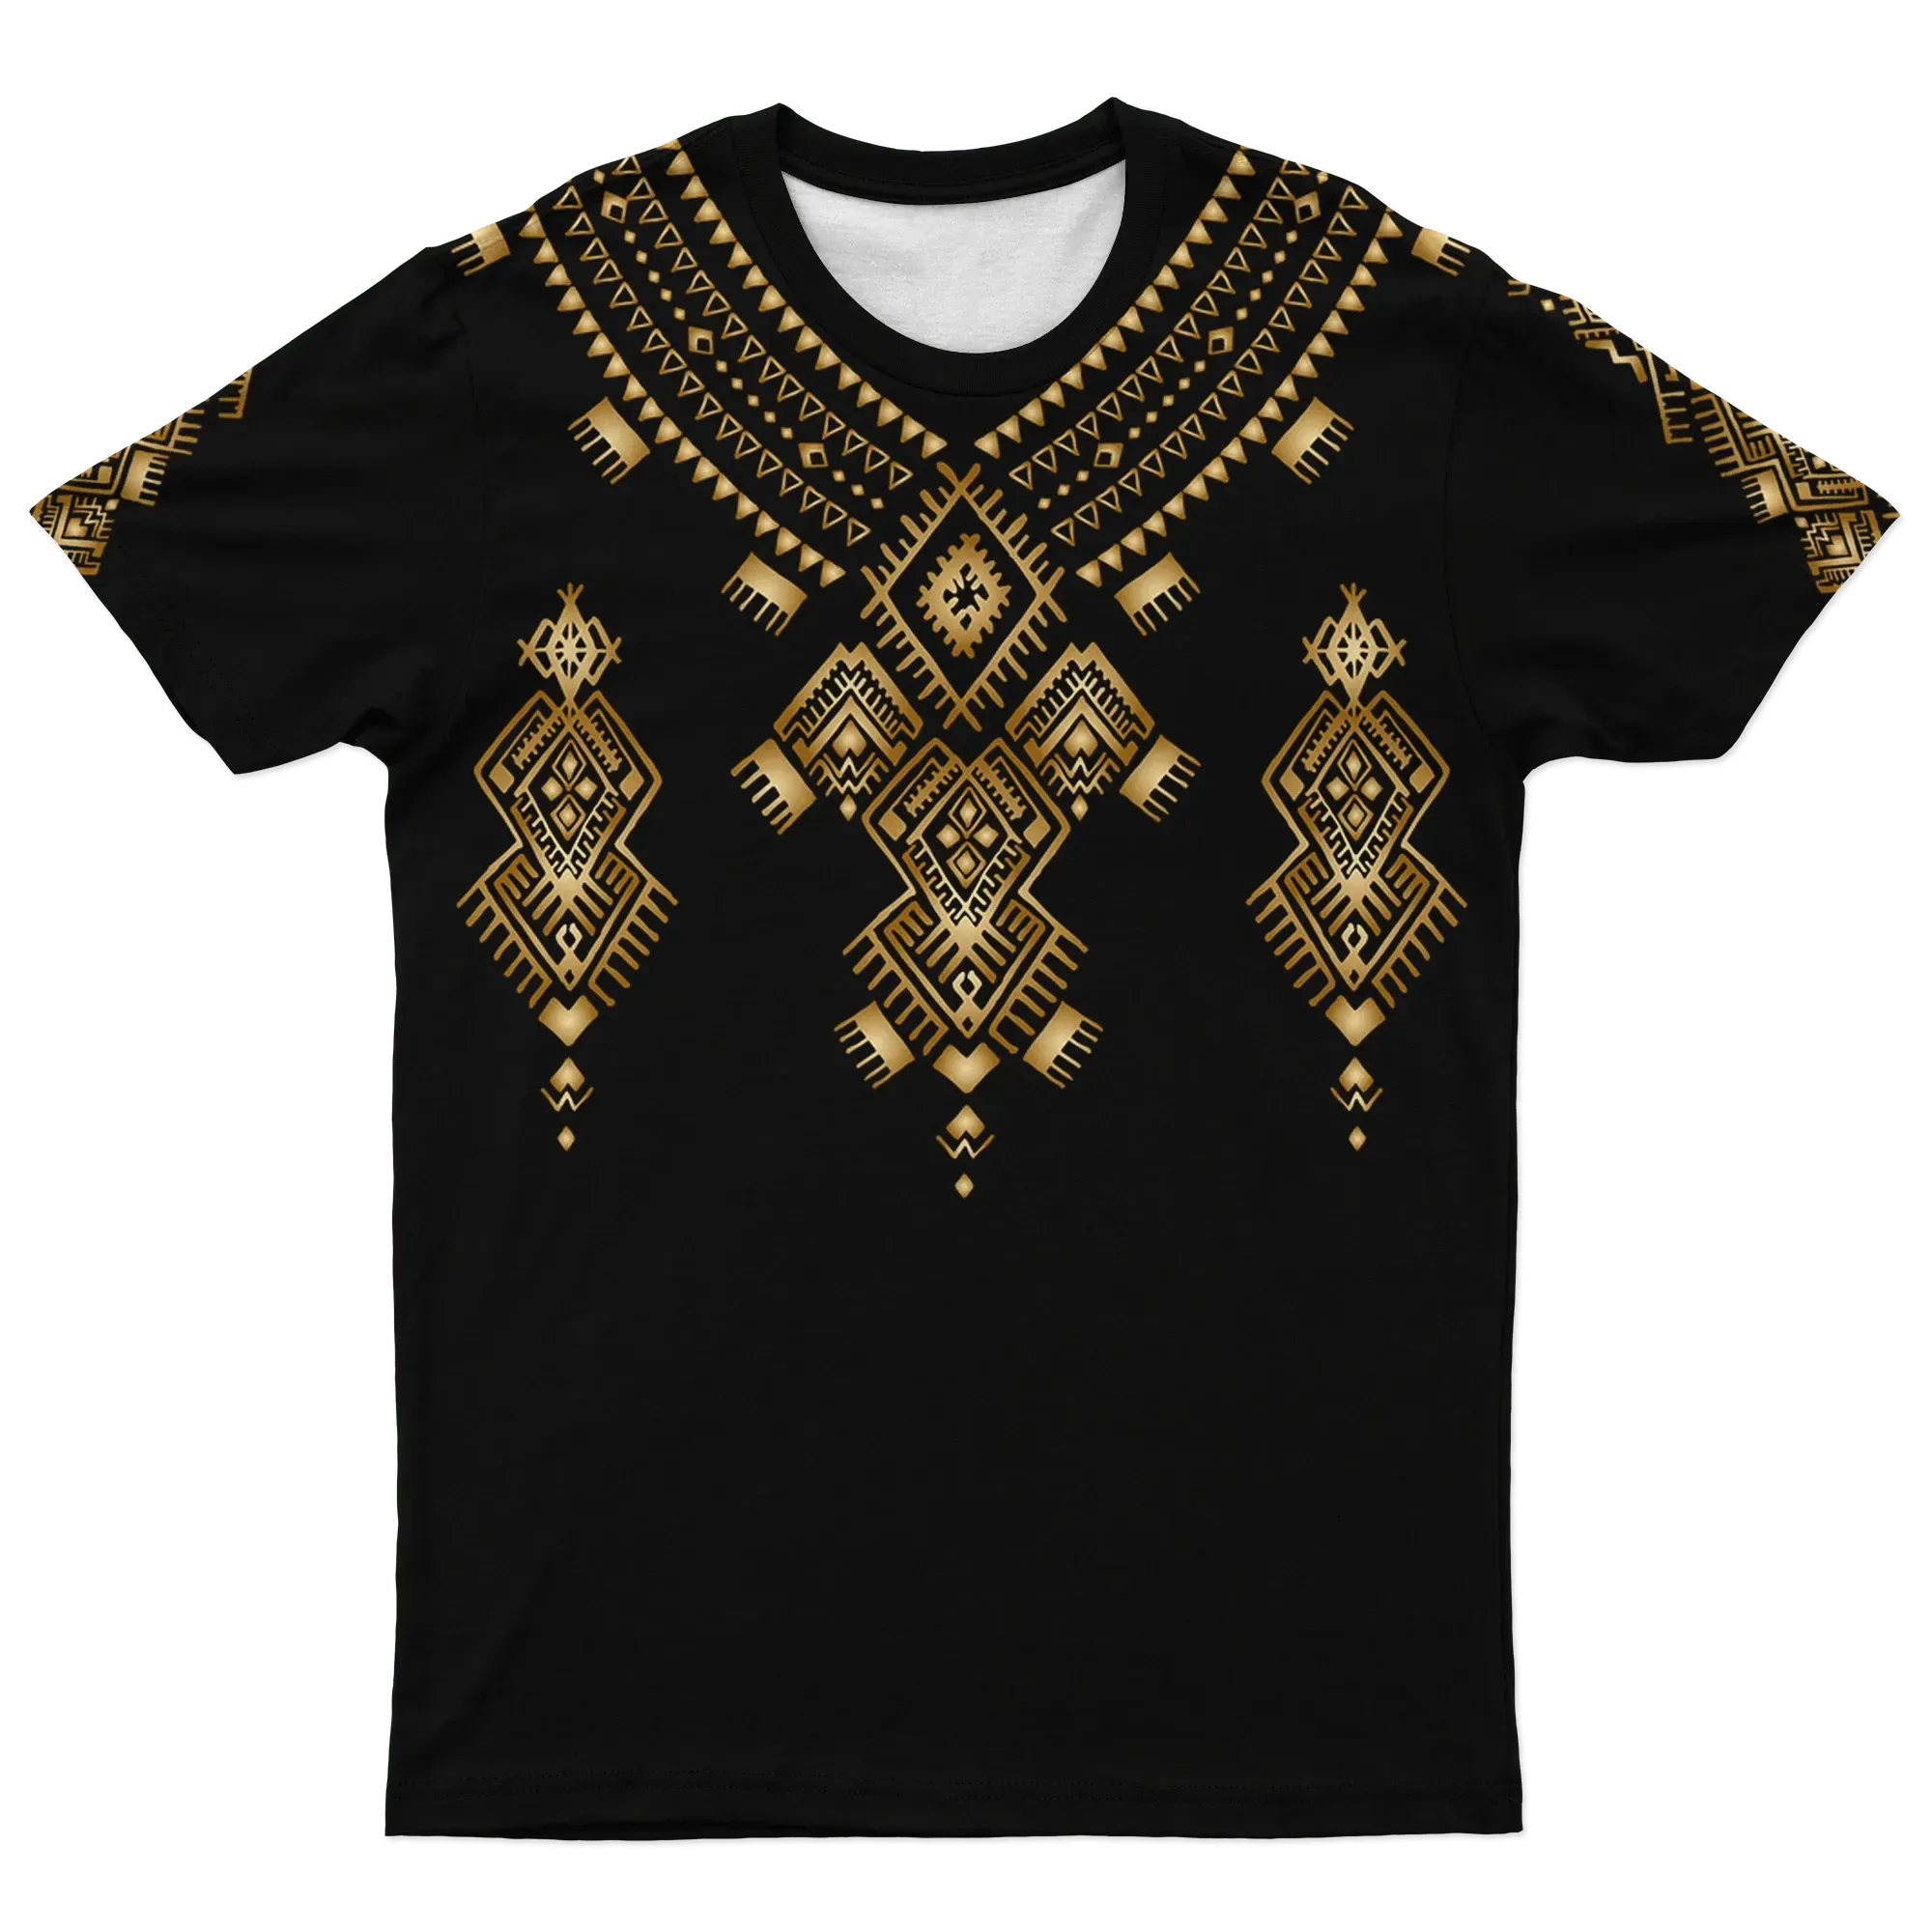 African T-shirt – Ethiopia Rasta Lion Black Tee